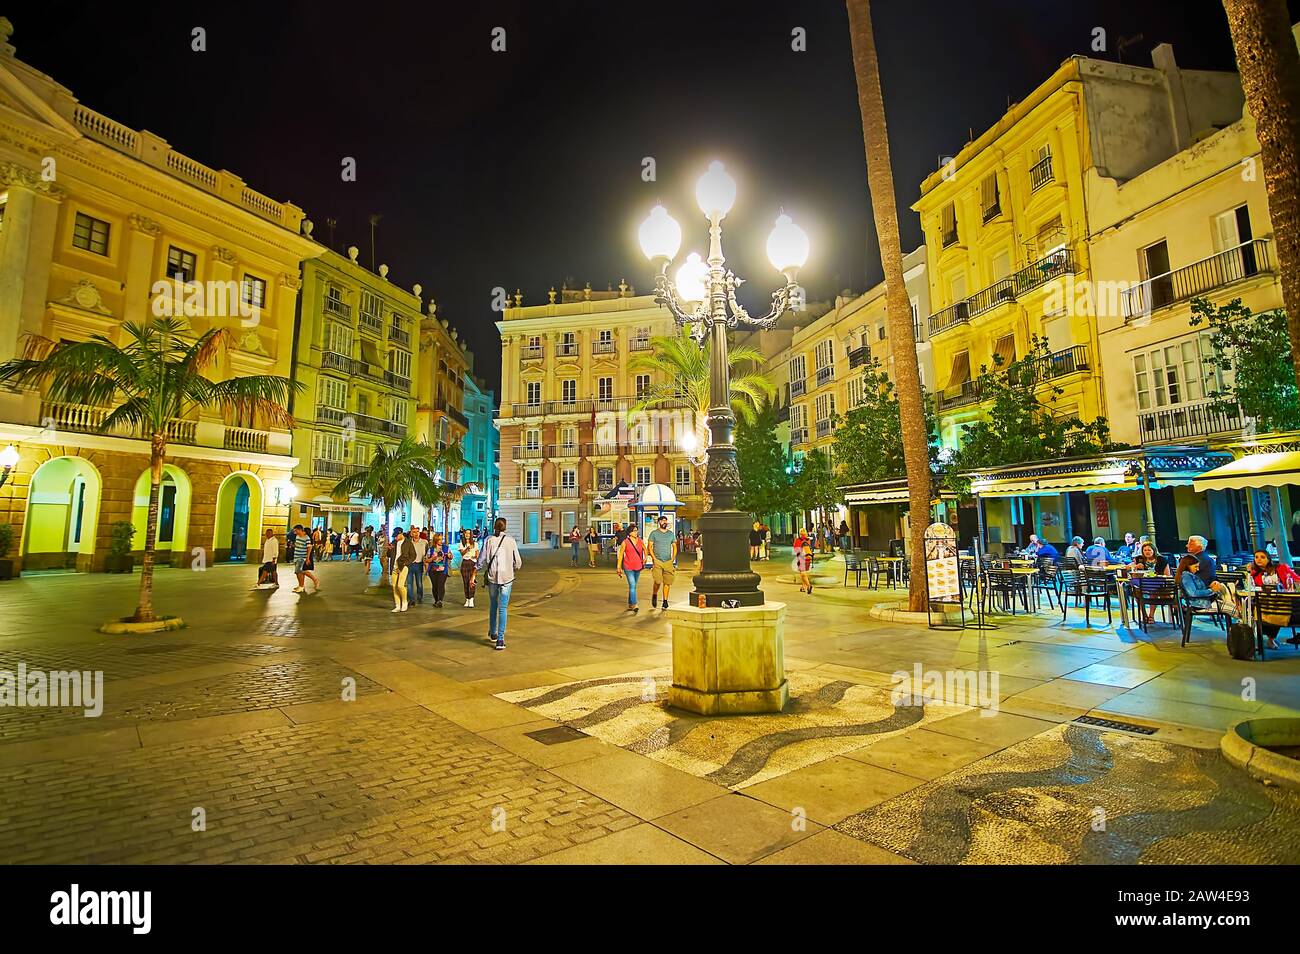 CADIZ, SPAIN - SEPTEMBER 20, 2019: The evening view of Plaza de San Juan de Dios square with vintage streetlight and Pazos Miranda House on the backgr Stock Photo